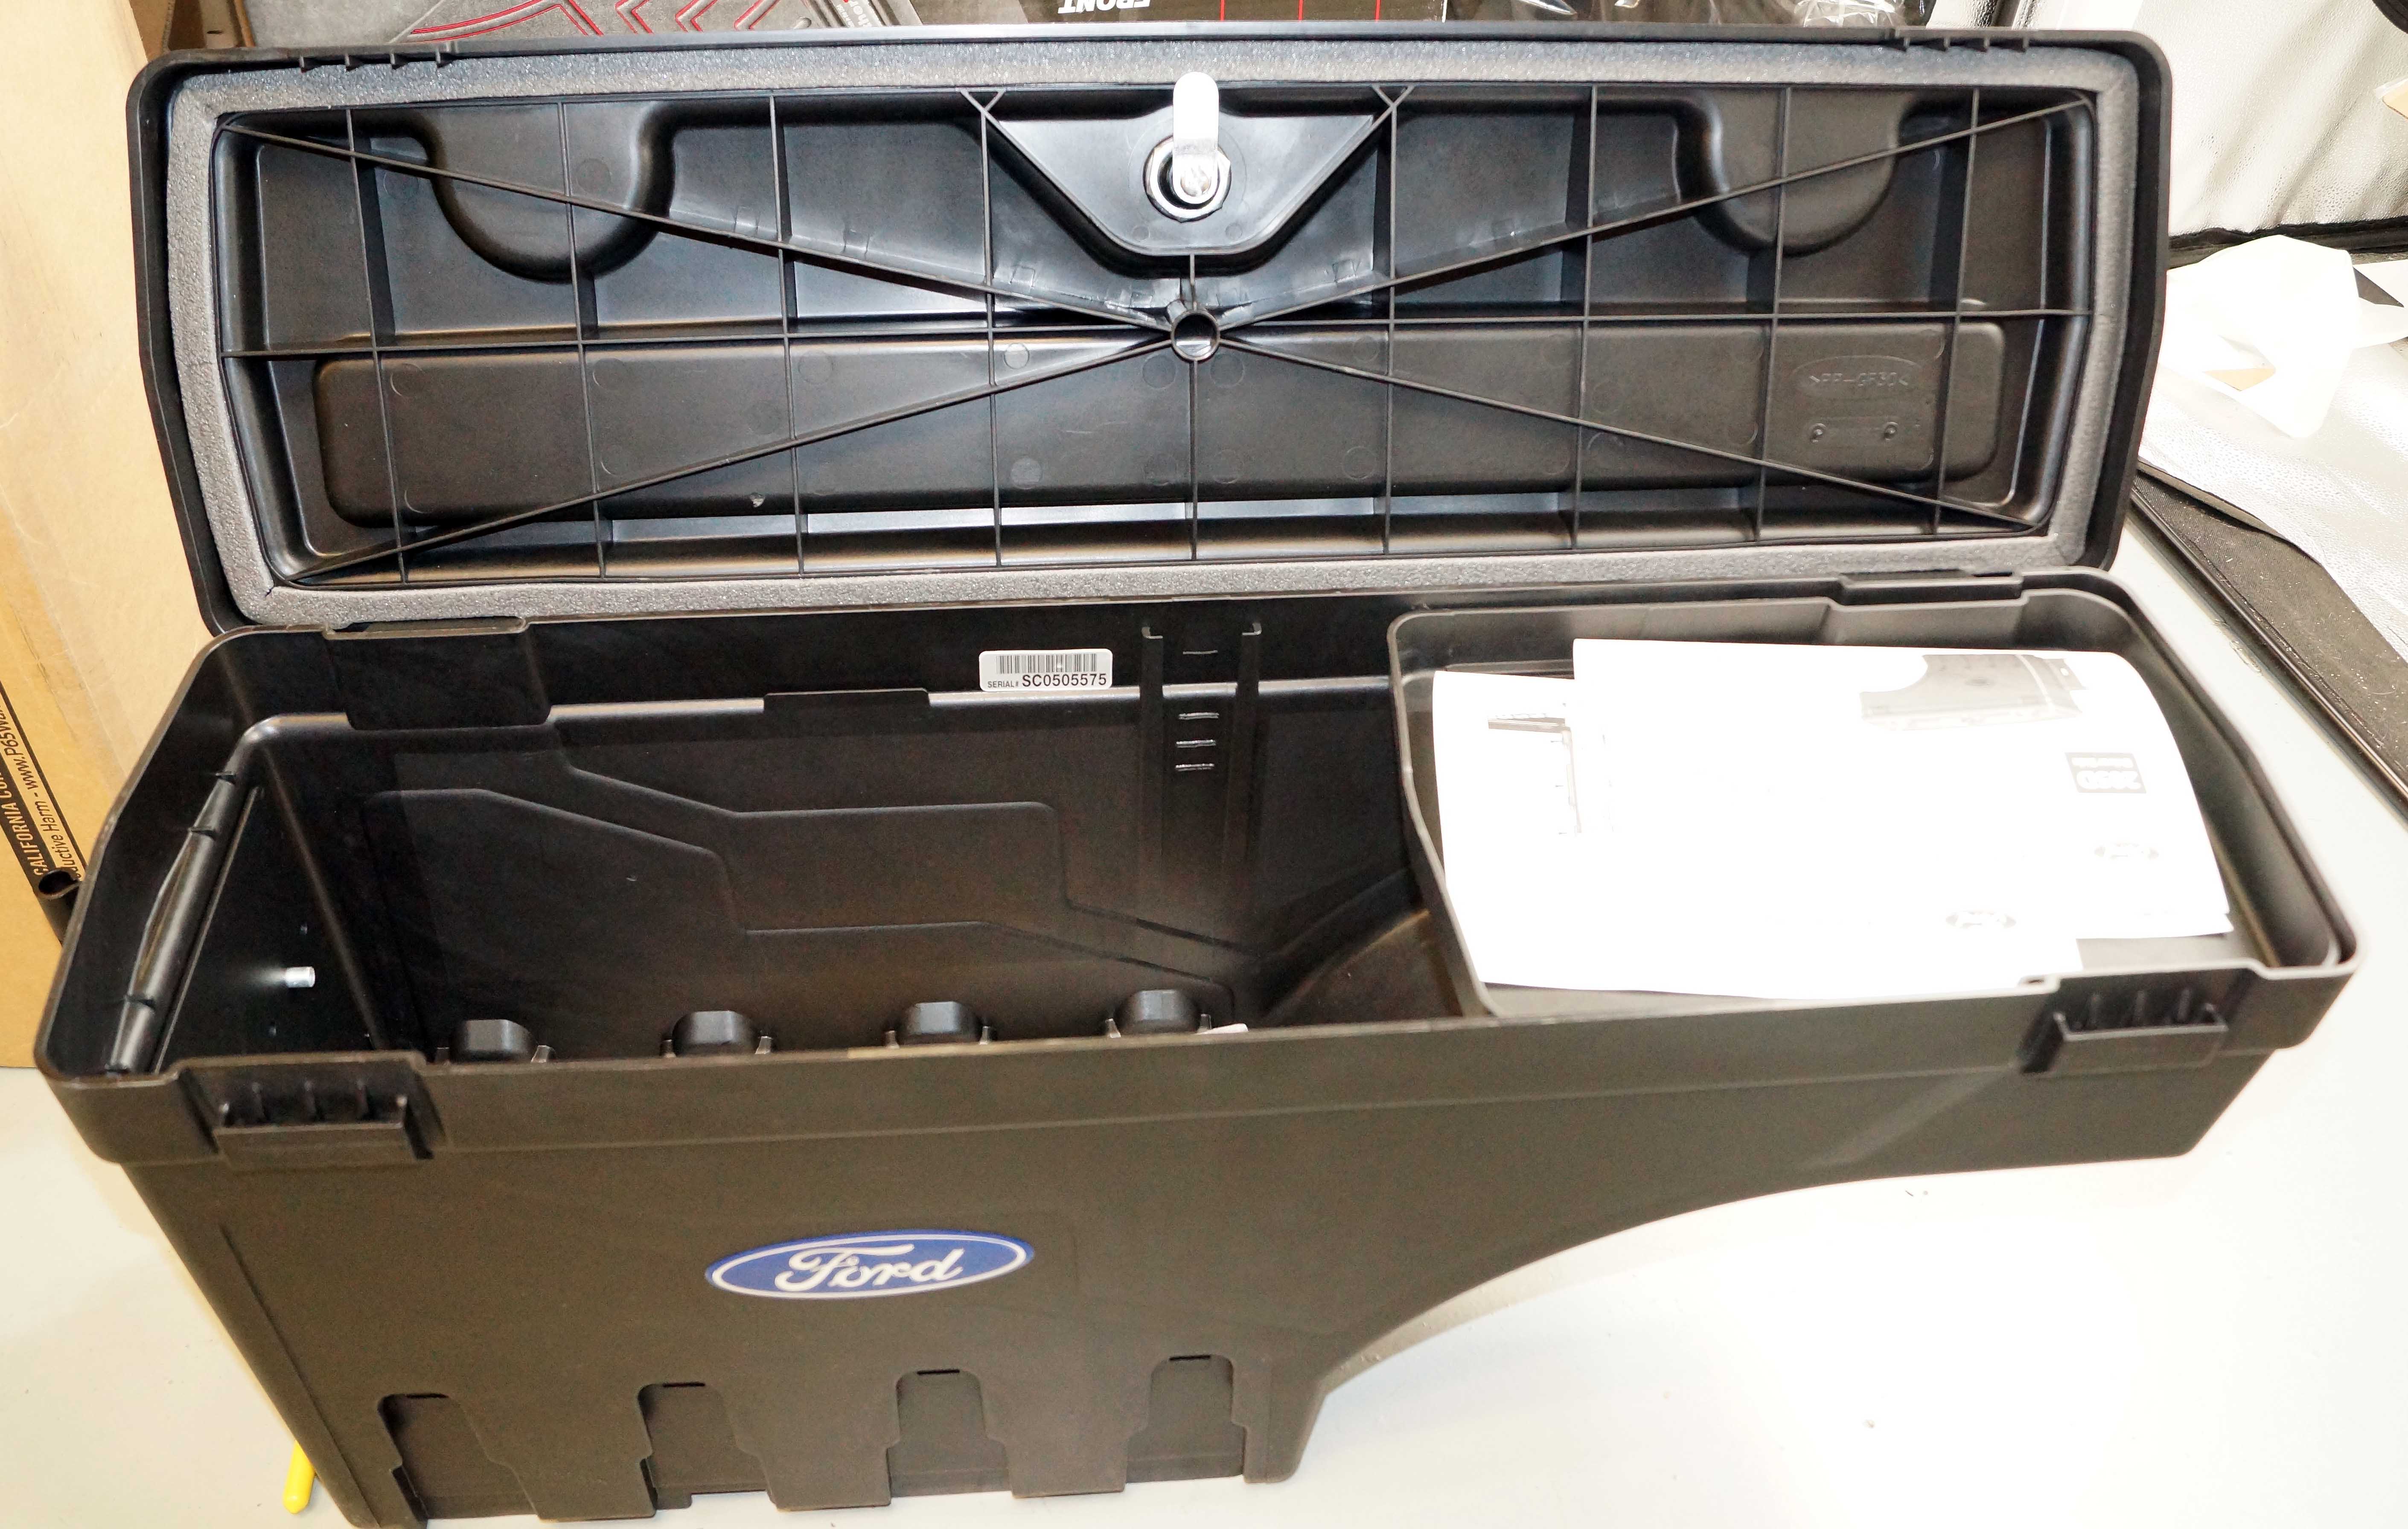 Genuine OEM VHC3Z17N004C Ford 17-18 Super Duty Left Side Bed Pivot Storage Box - image 3